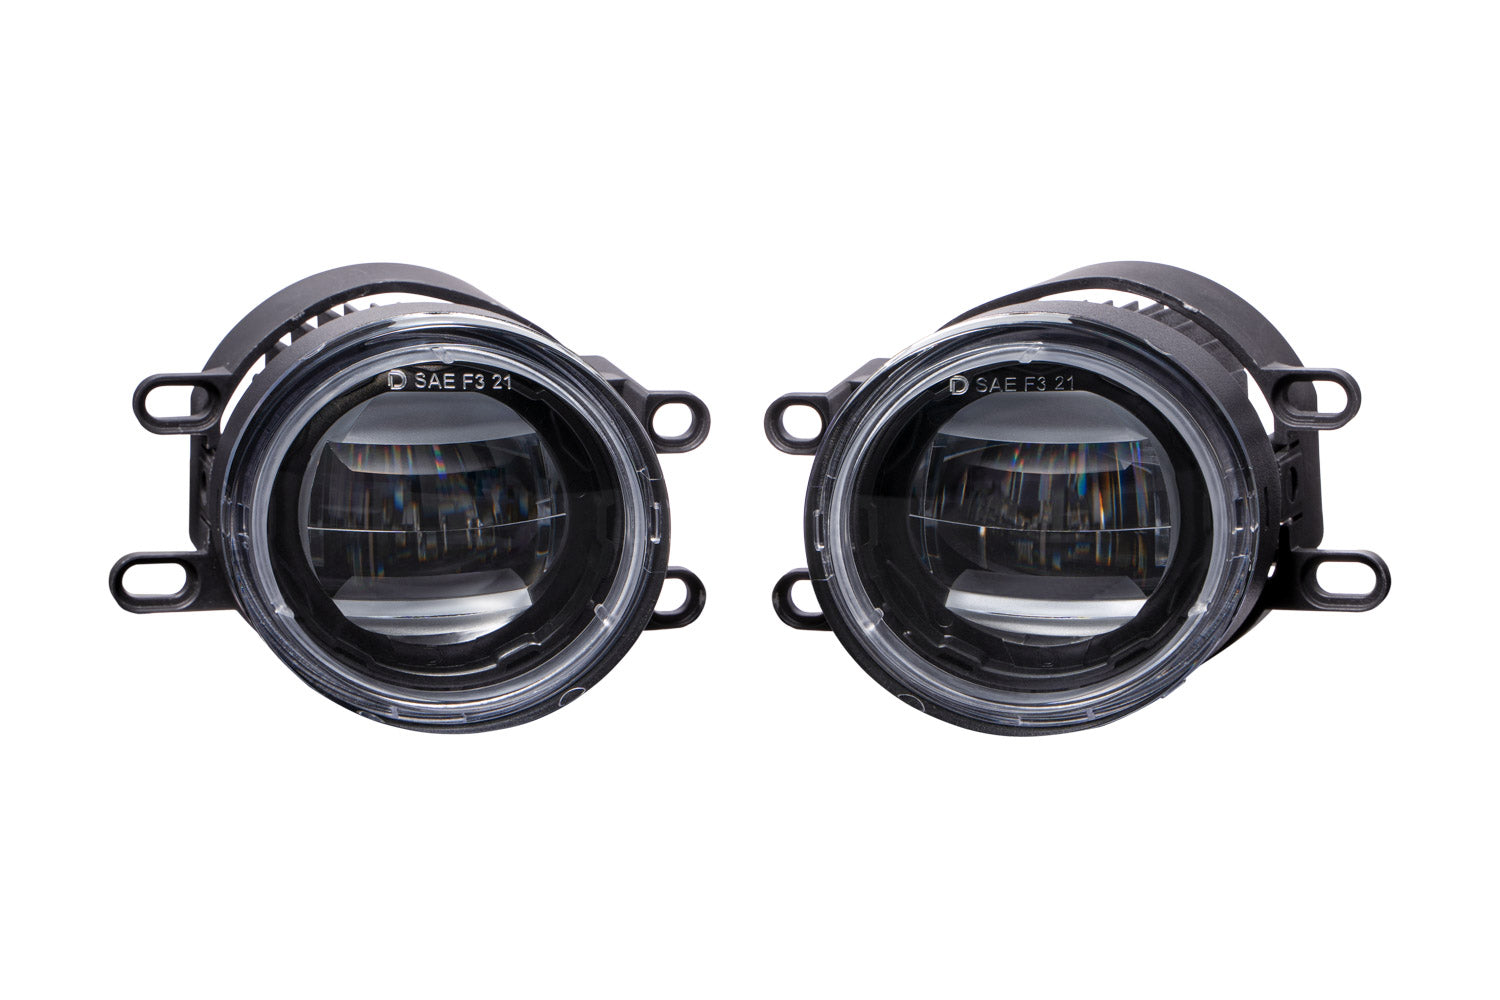 Elite Series Type B Fog Lamps (pair) – Prolightz